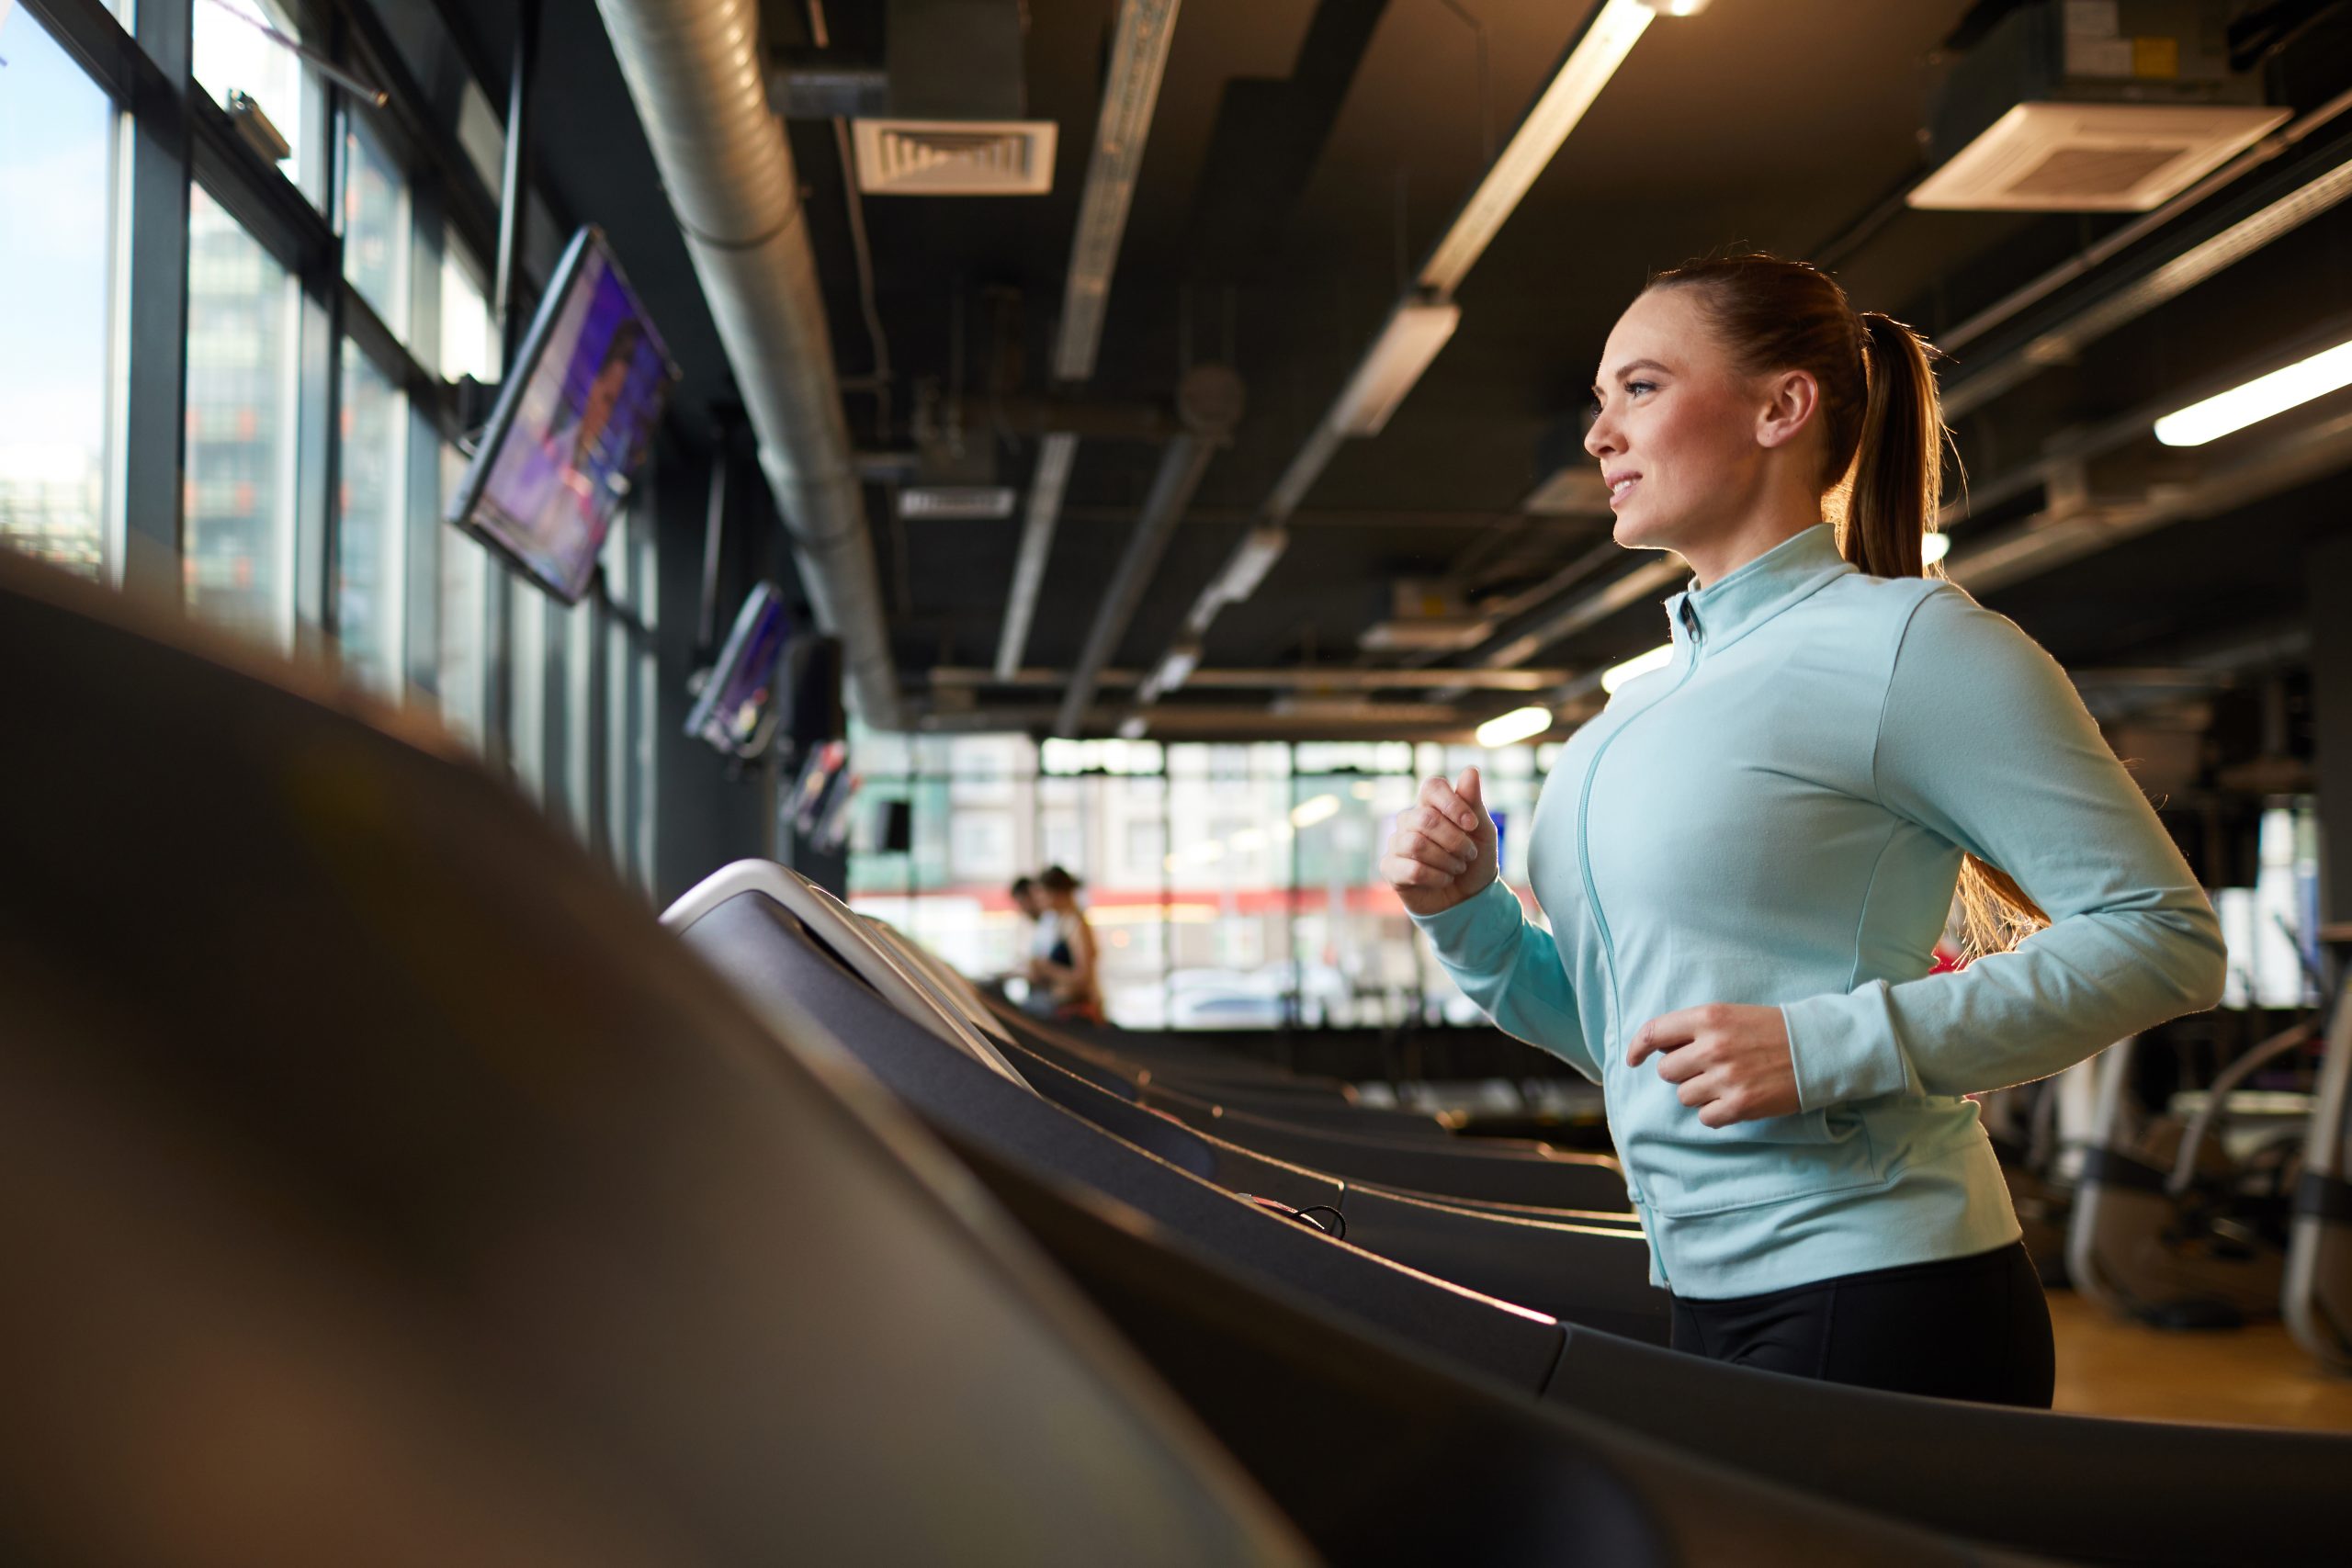 4 Ways to Start Improving at the Gym